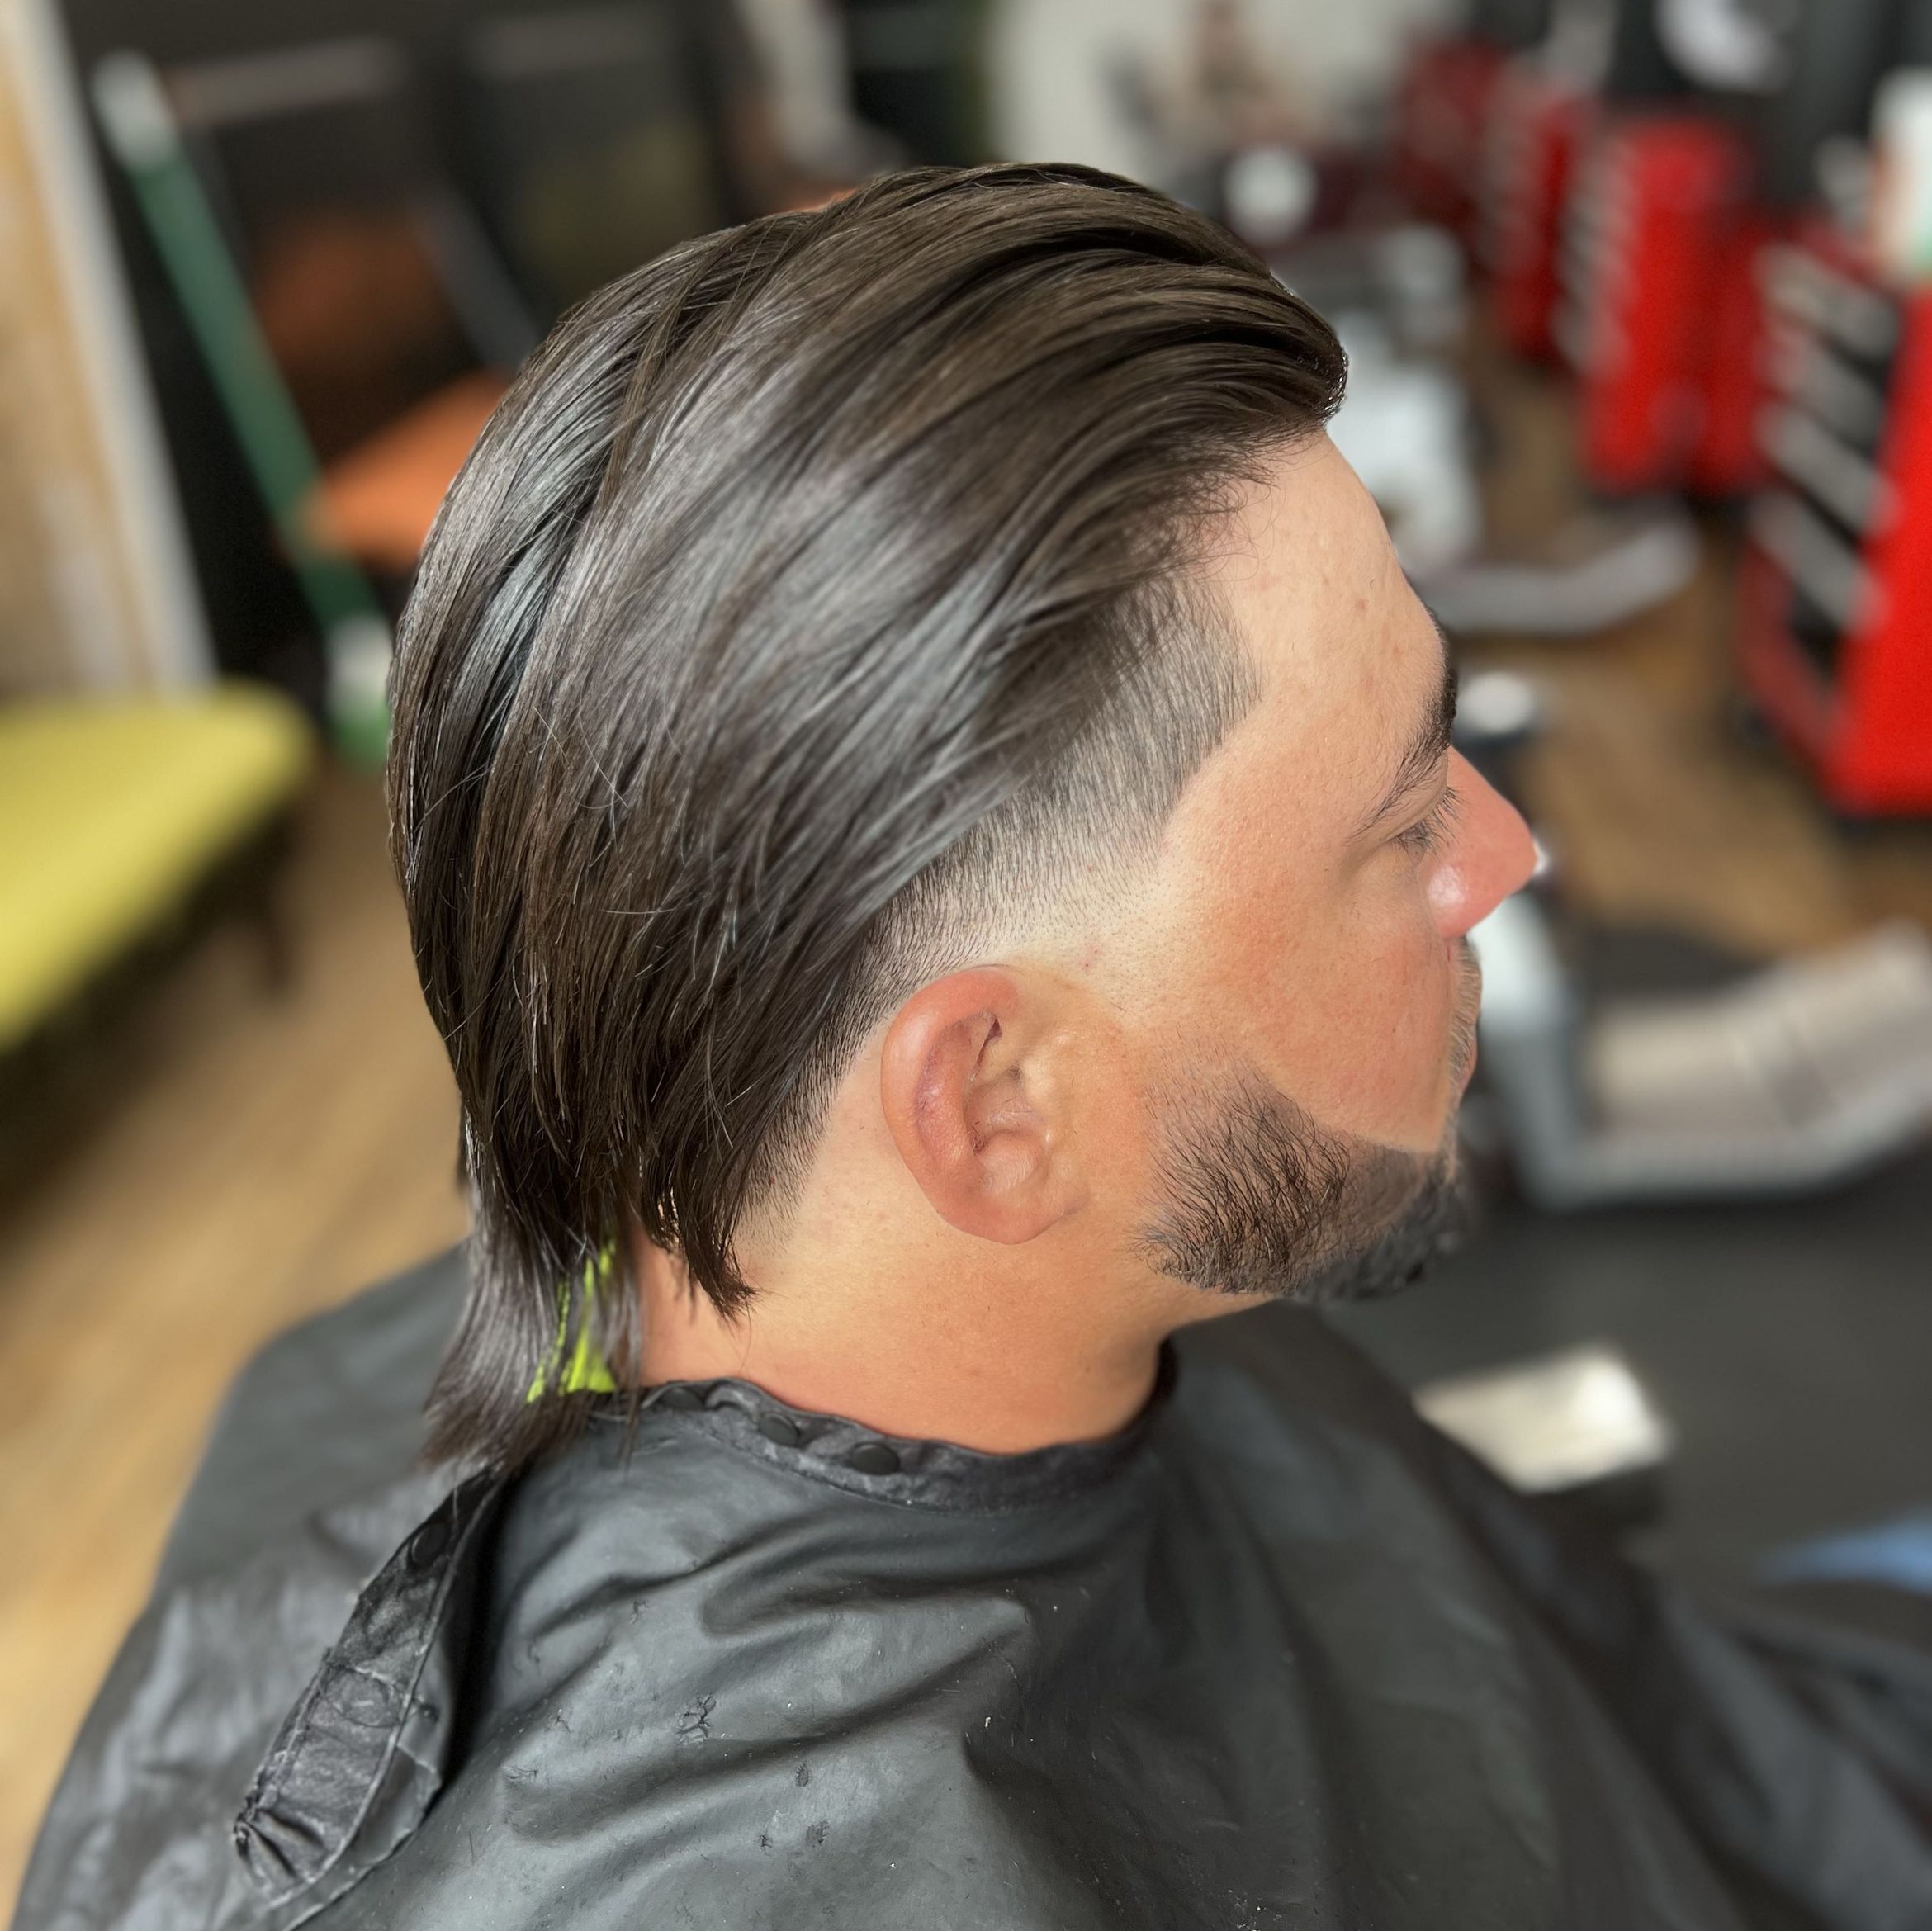 Men’s haircuts portfolio